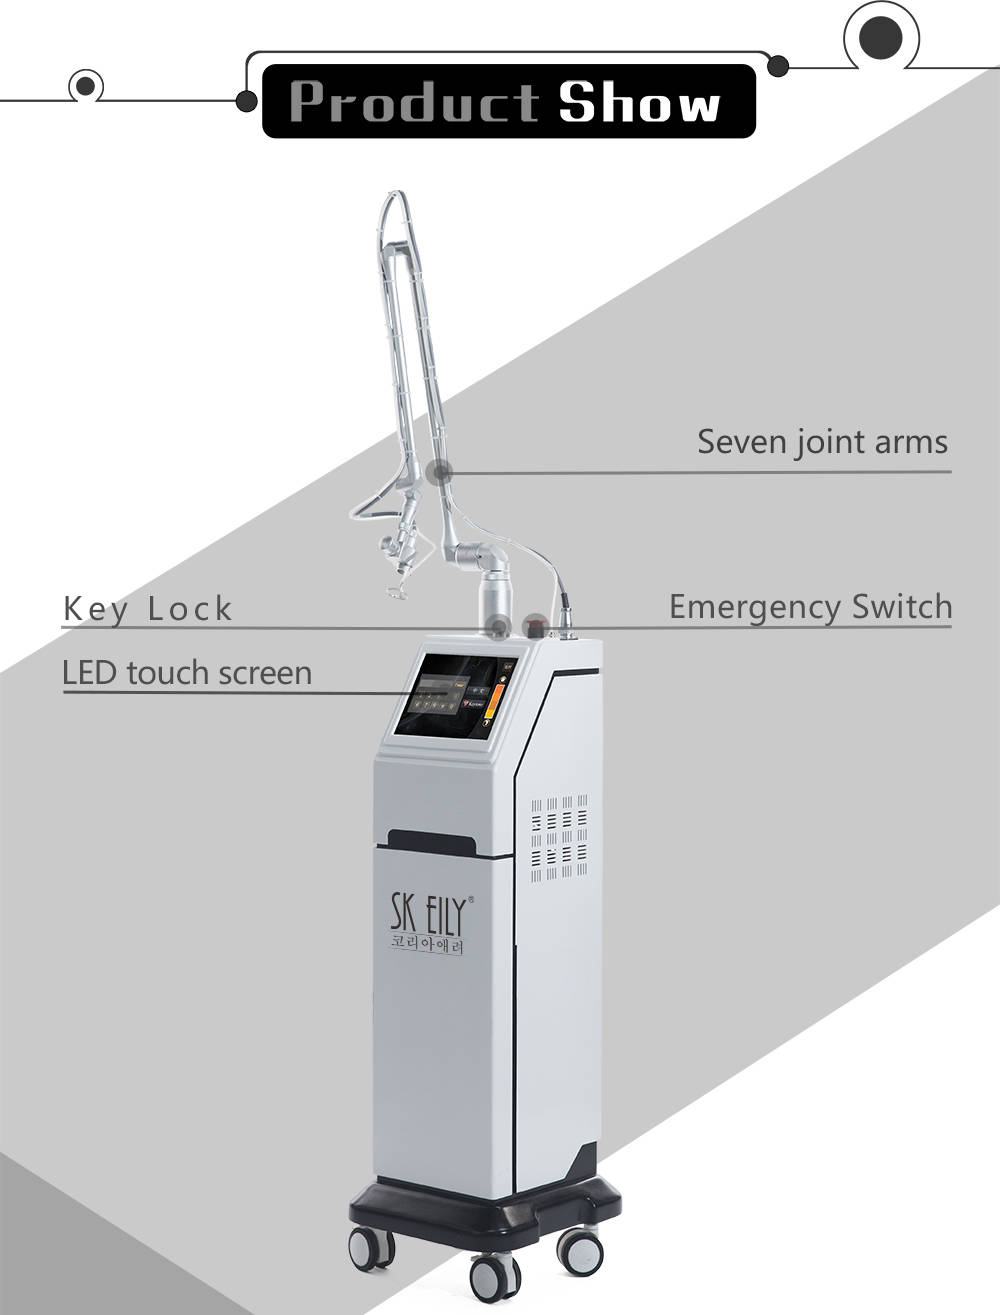 10600nm Fractional Co2 Laser Scar Removal Skin Rejuvenation Beauty Machine